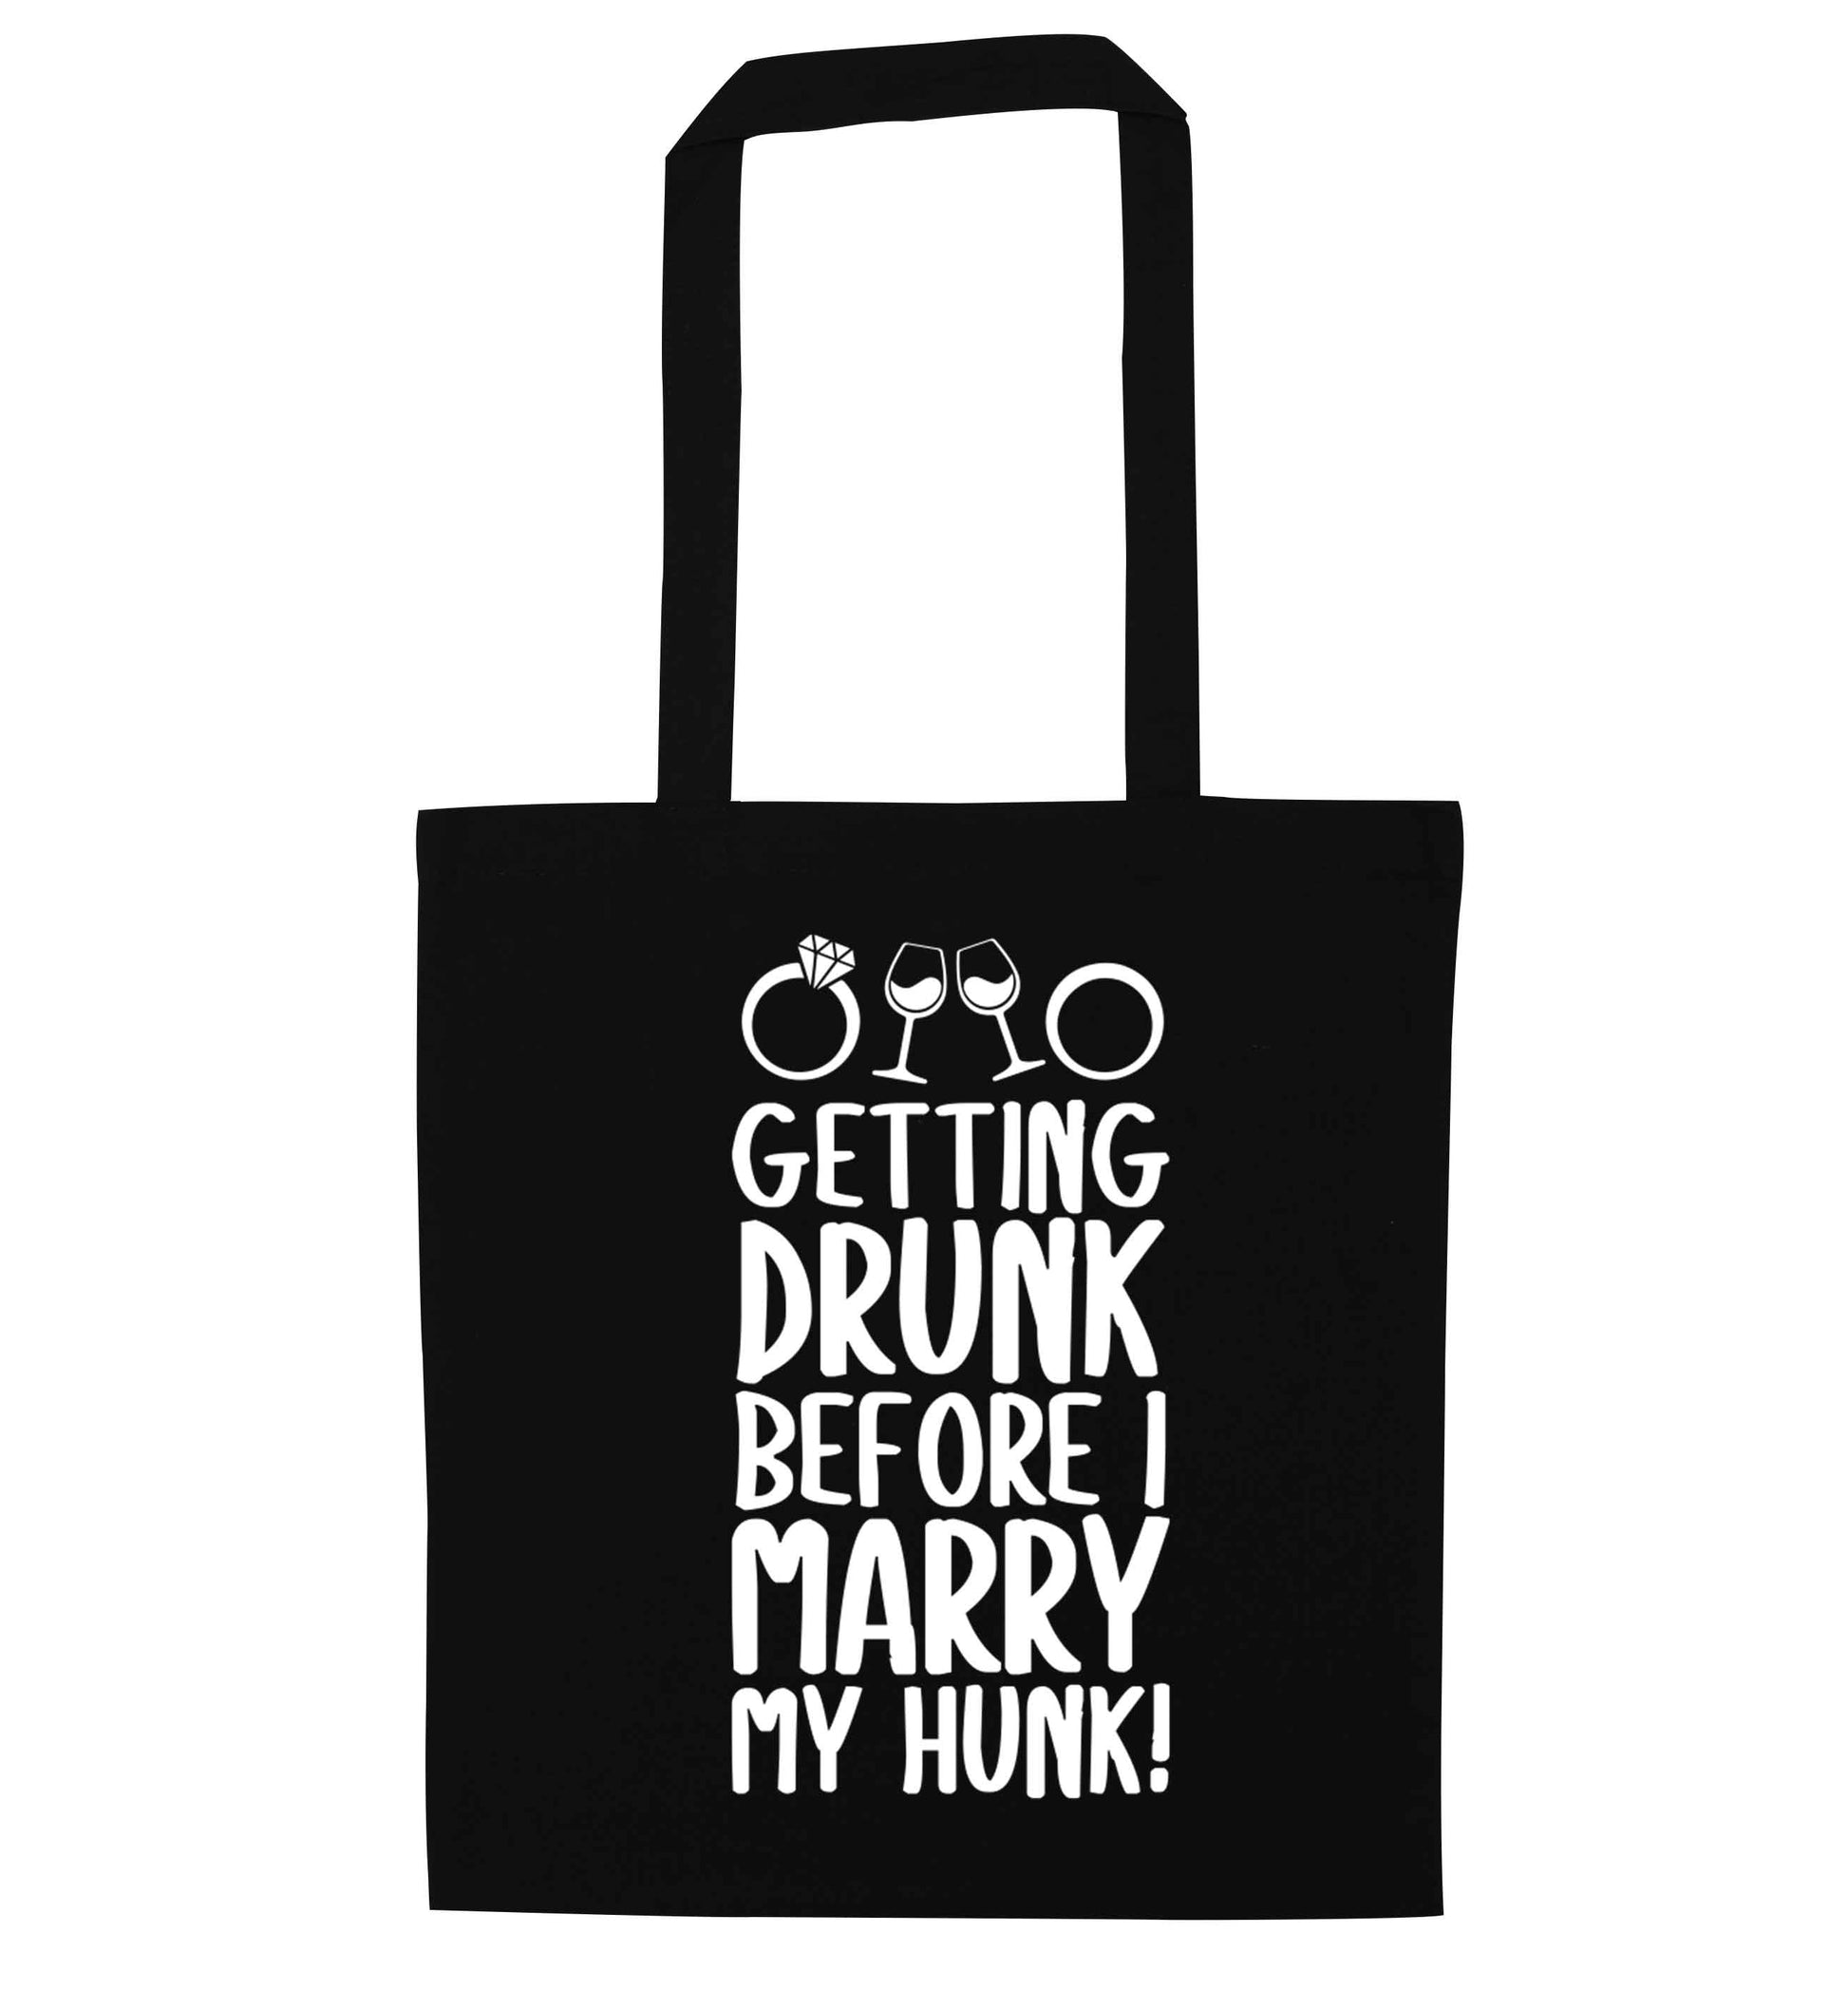 Getting drunk before I marry my hunk black tote bag